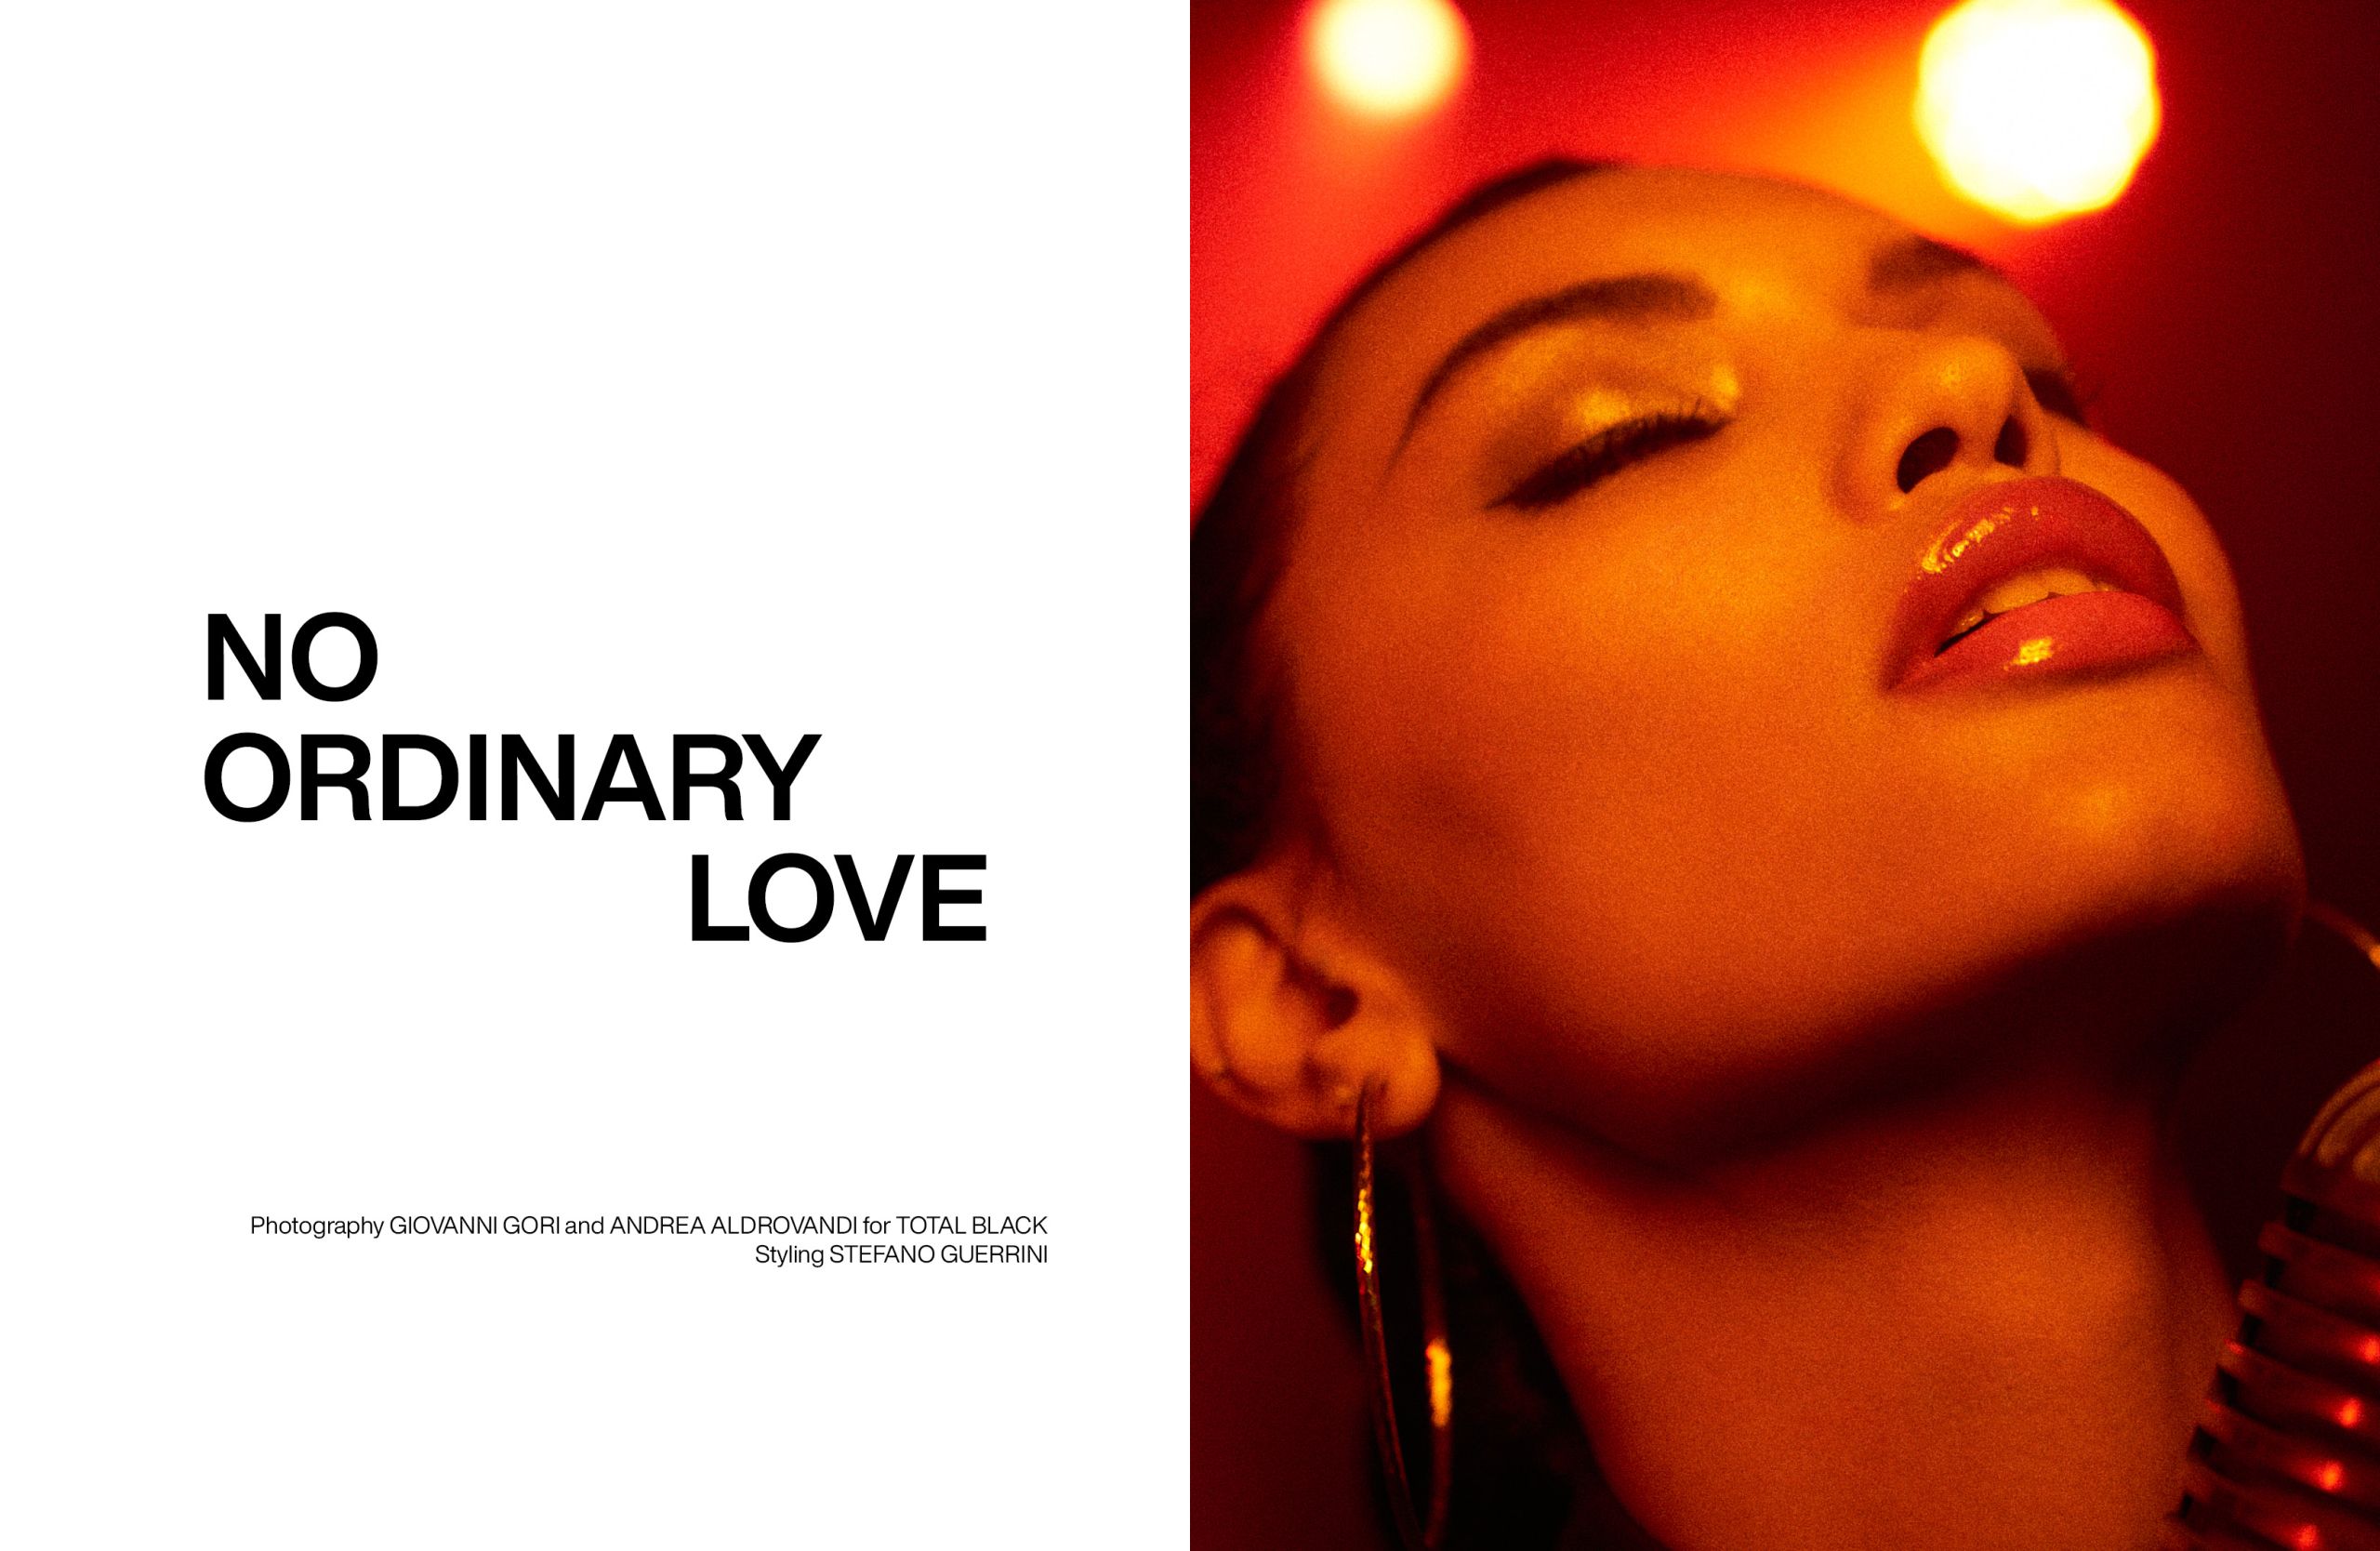 No ordinary love - Editorial on Dscene - Pic. 1